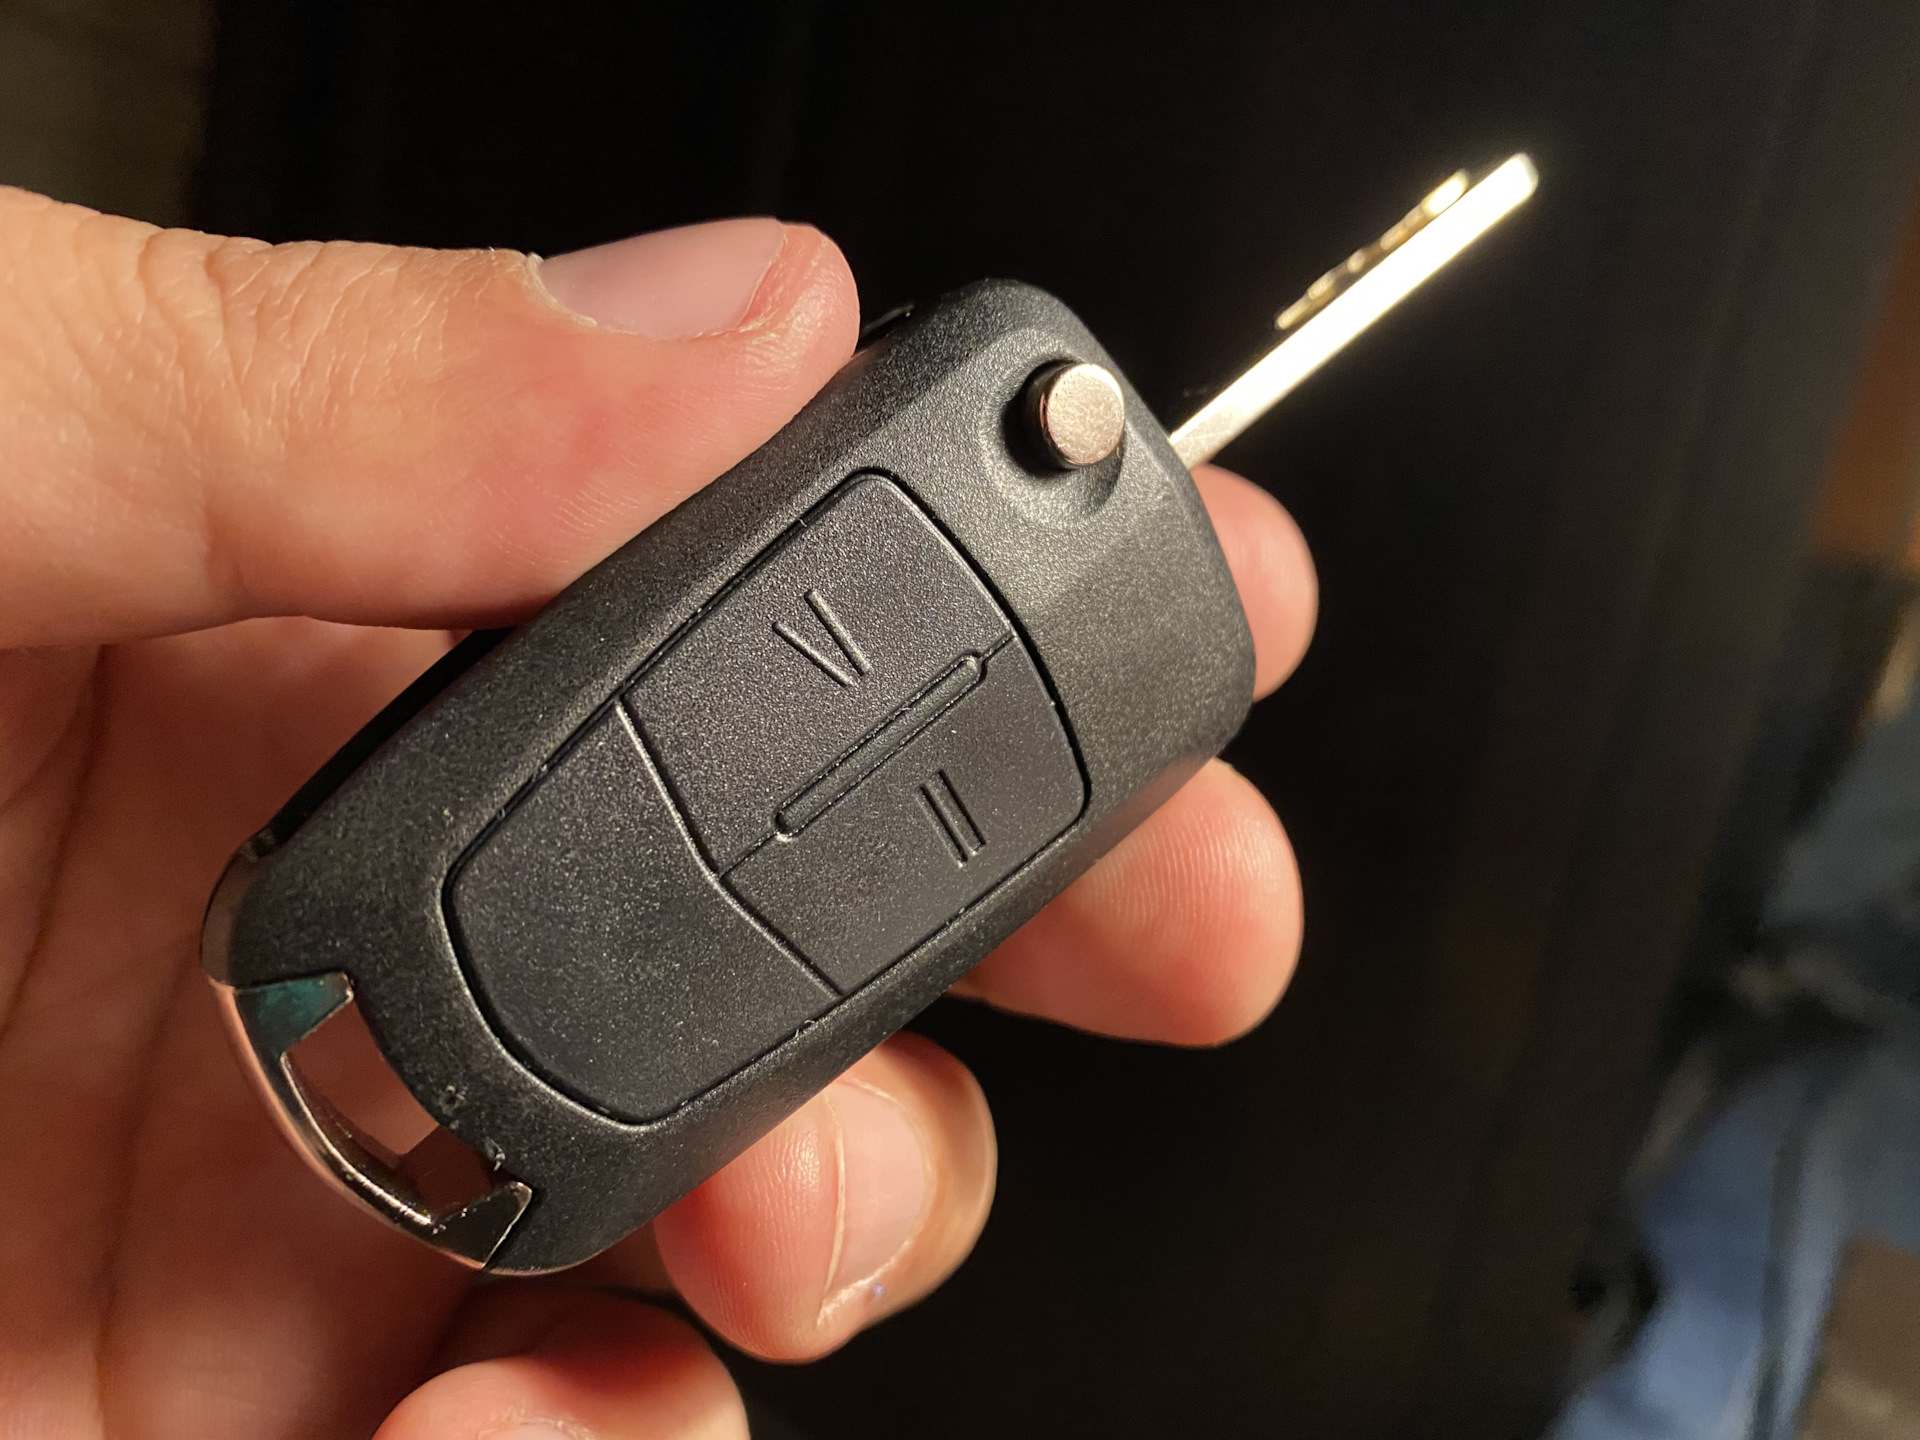 Ключ зафира б. Ключ Opel Zafira b. Opel Zafira b Центральный замок. Ключи от машины Опель. Ключ центрального замка.